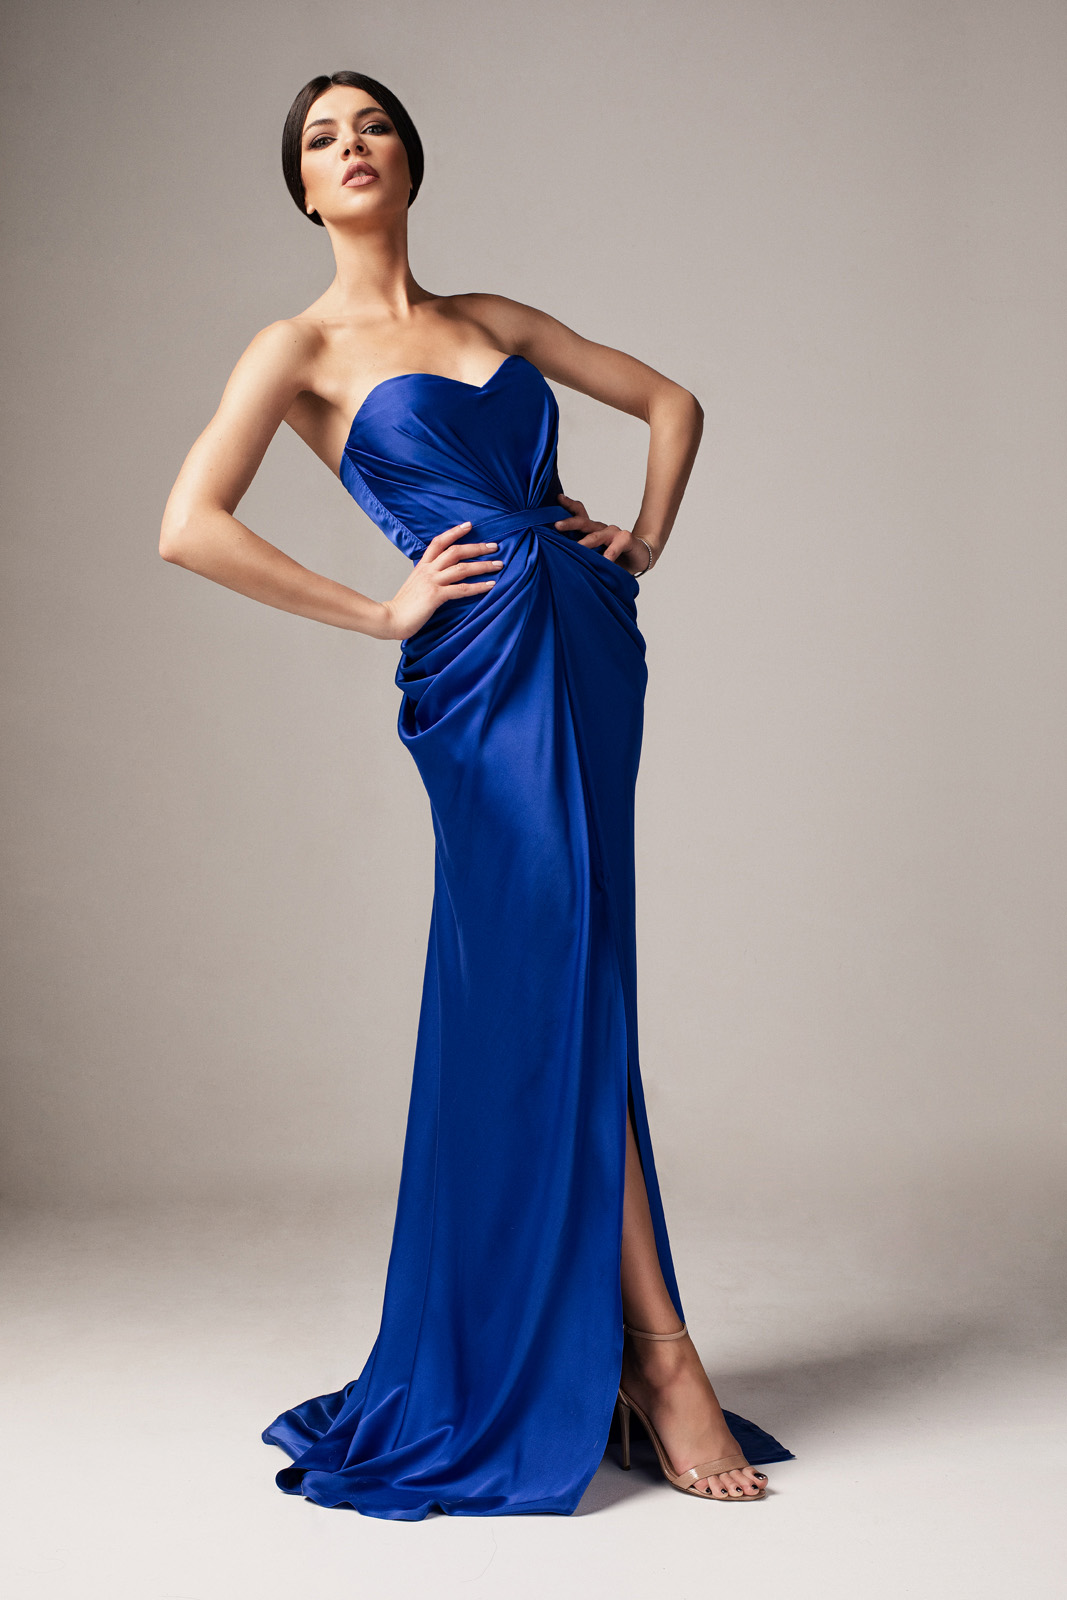 https://photos.starshiners.com/55983/ana-radu-luxurious-off-shoulder-dress-from-satin-fabric-texture-with-push-up-bra-S028888-10-424143.jpg